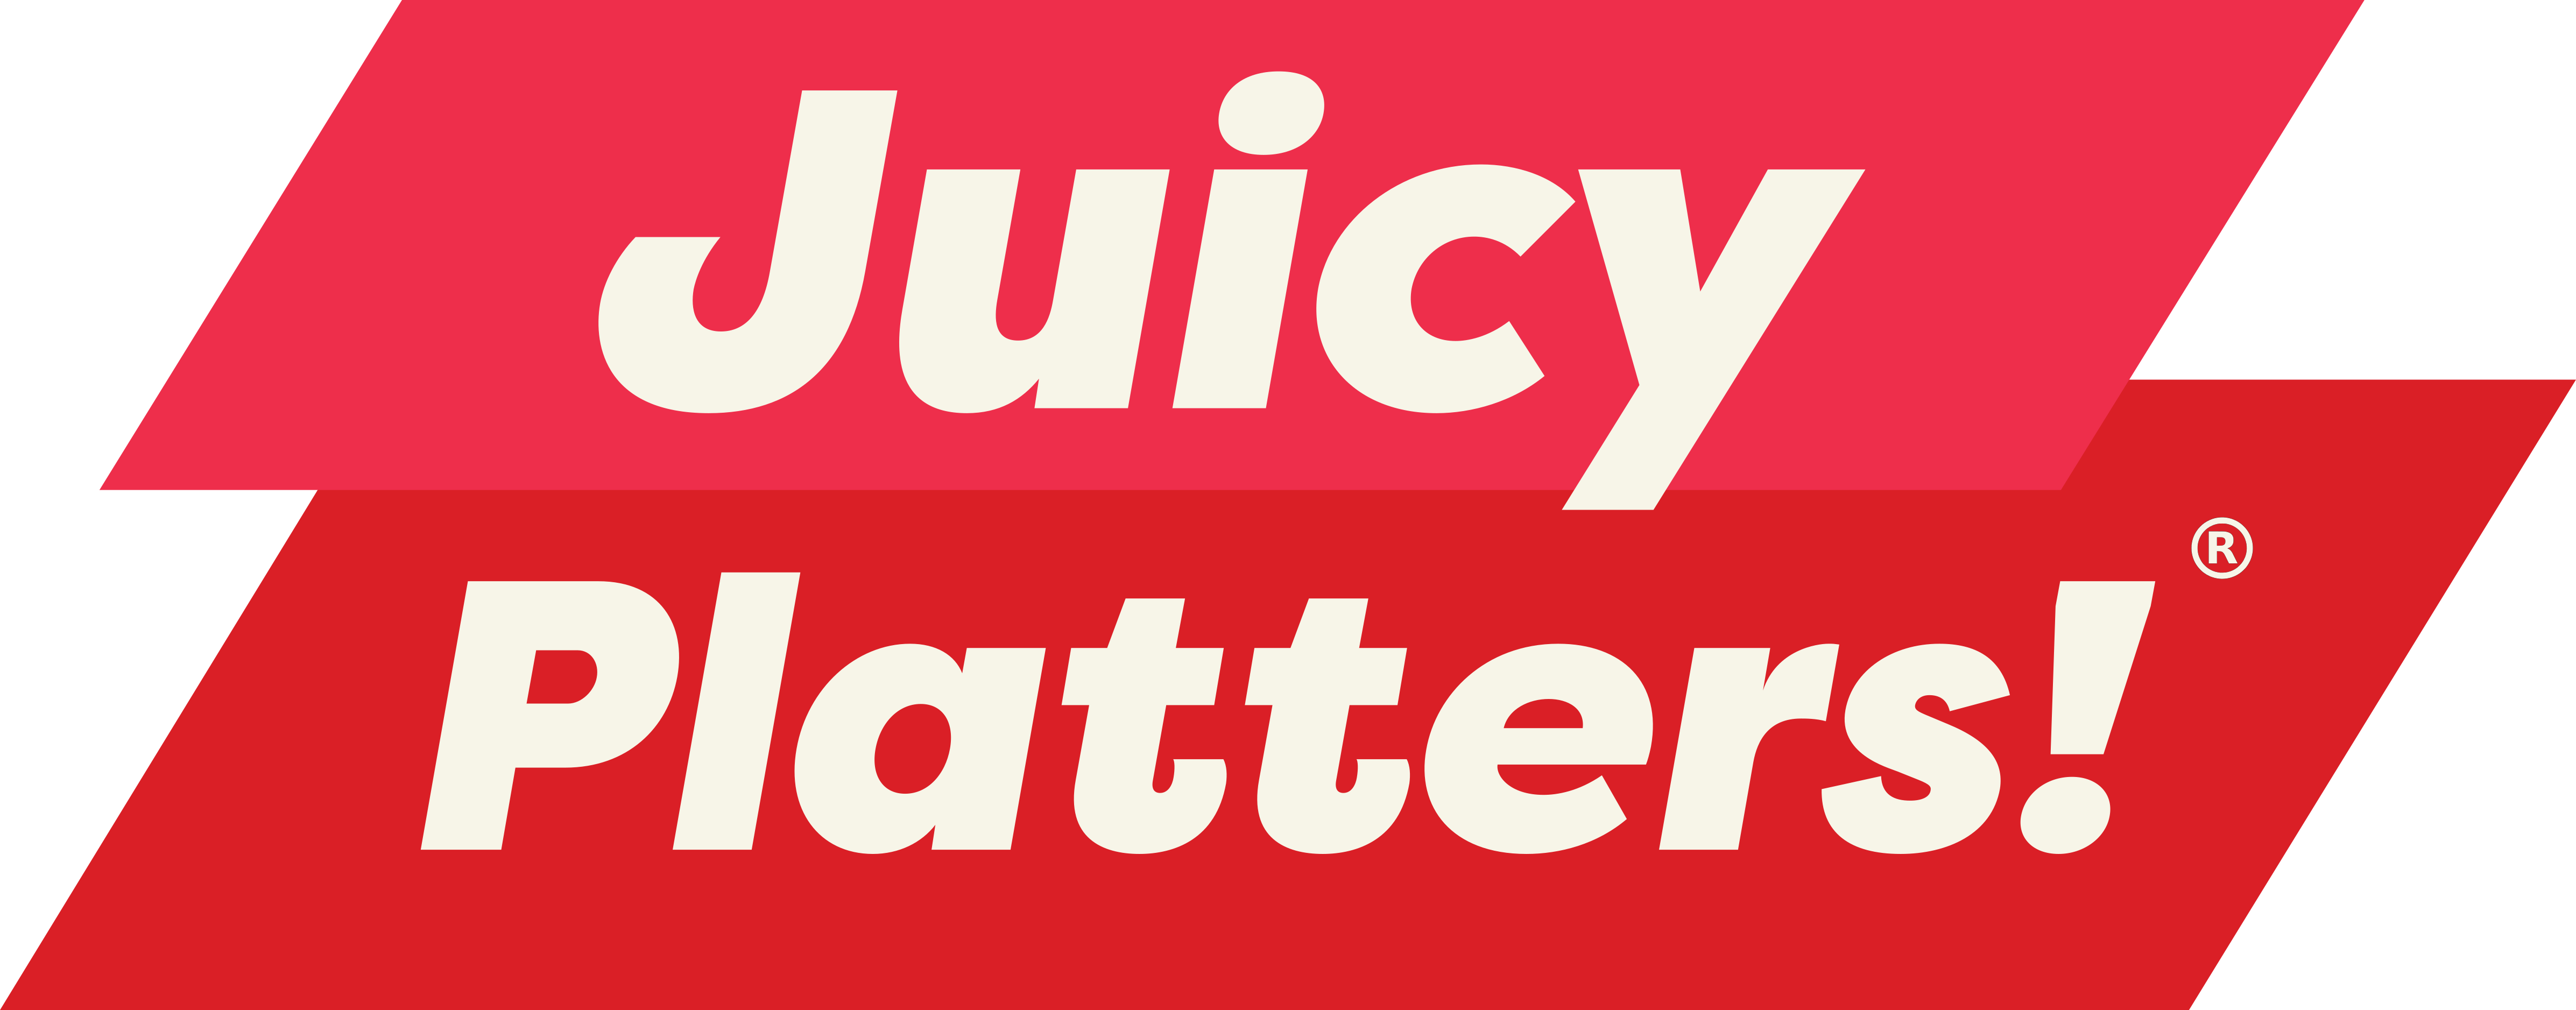 Juicy Platters Halal Food